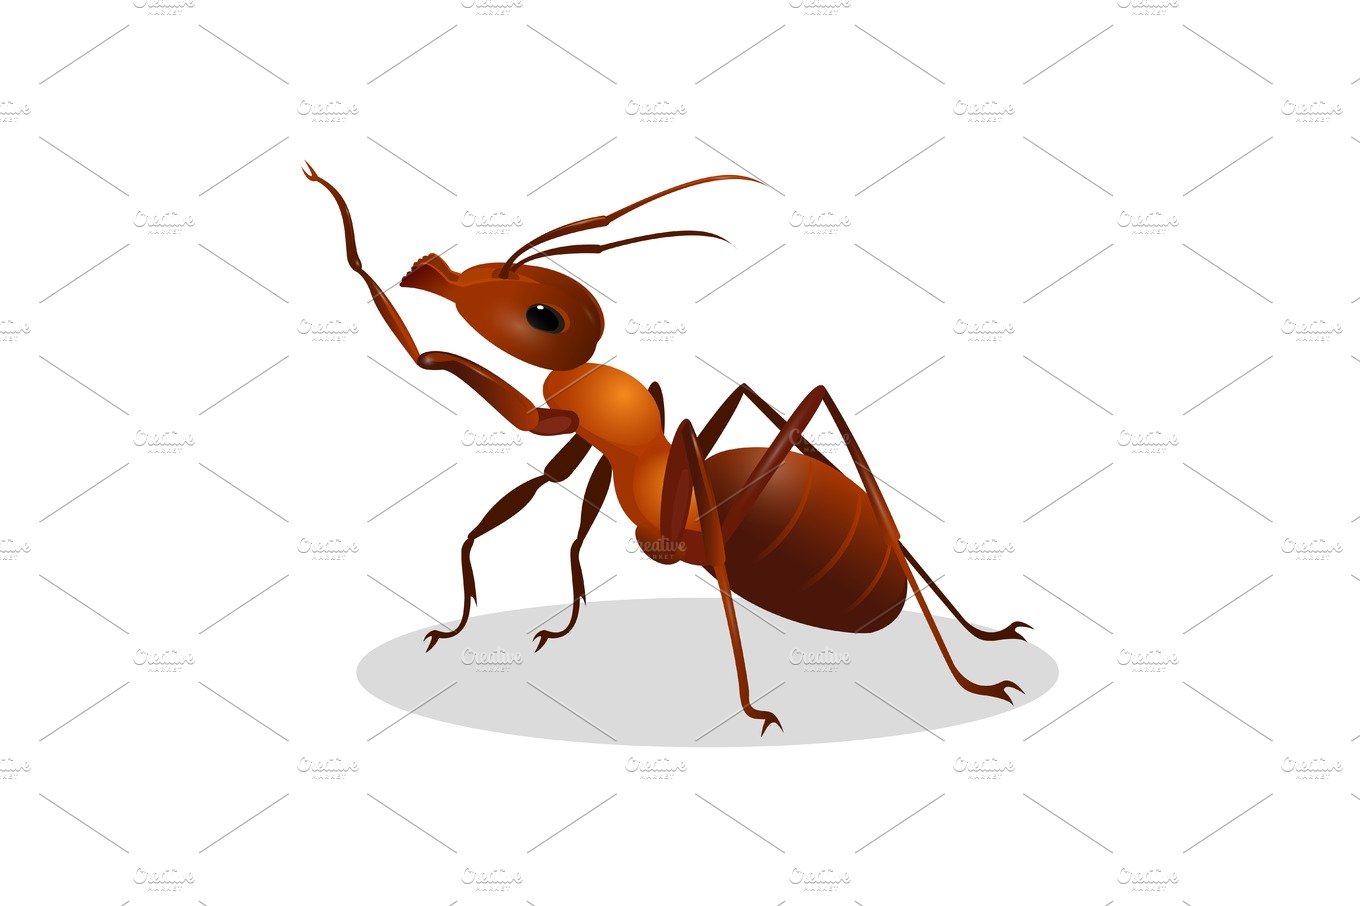 Cartoon realistic ant isolated on white. One leg raised up cover image.